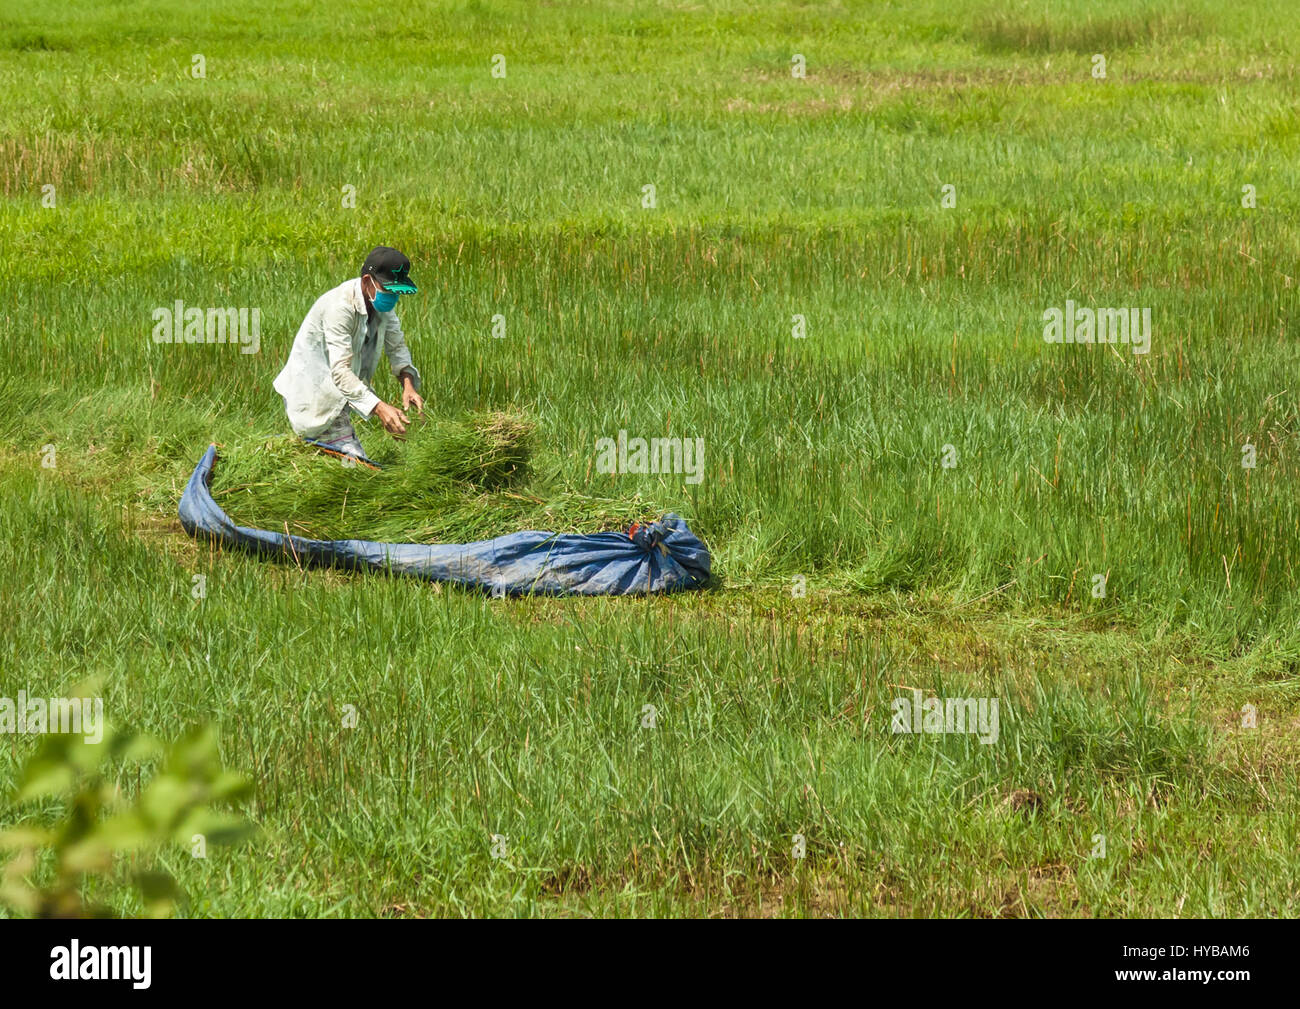 It's harvest time for the rice farmers near Saigon Stock Photo